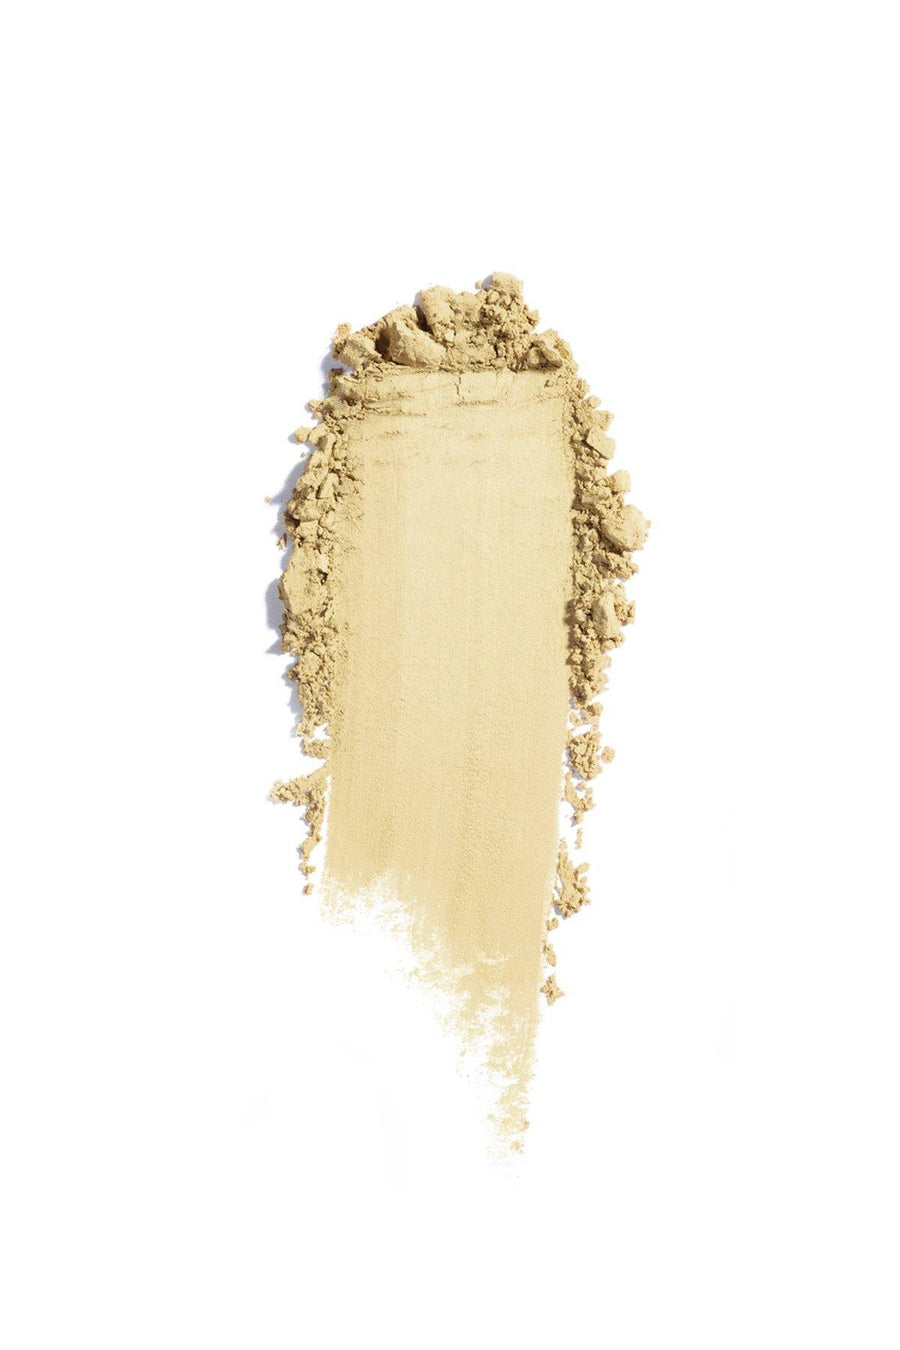 Shimmer Eyeshadow #63 - Banana Matte - Blend Mineral Cosmetics